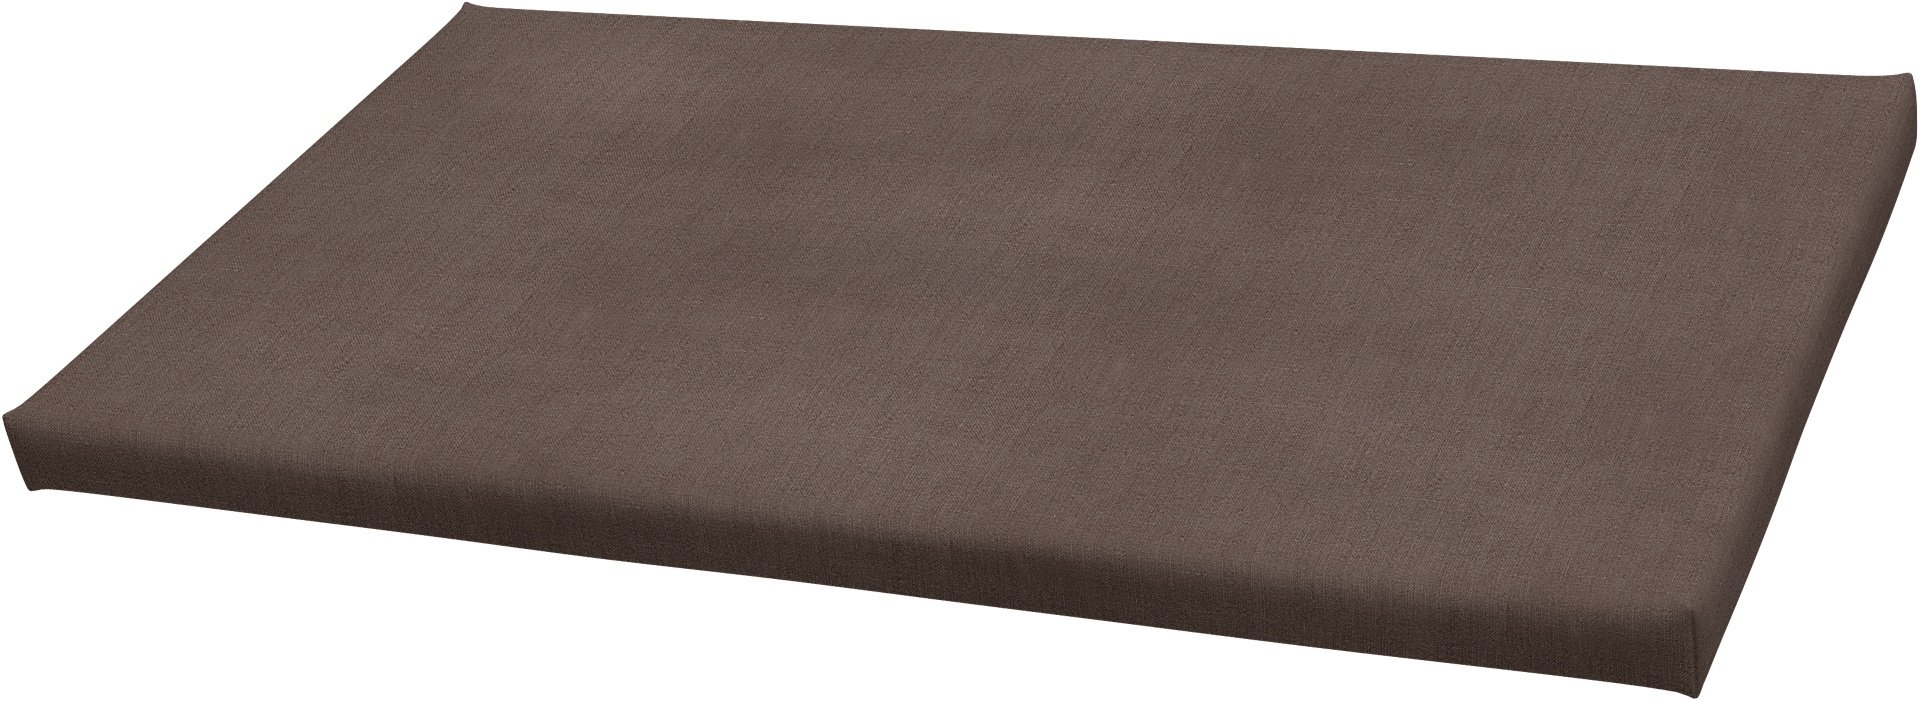 IKEA - Bankkamrat Cushion Cover 90x50x3,5 cm , Cocoa, Linen - Bemz